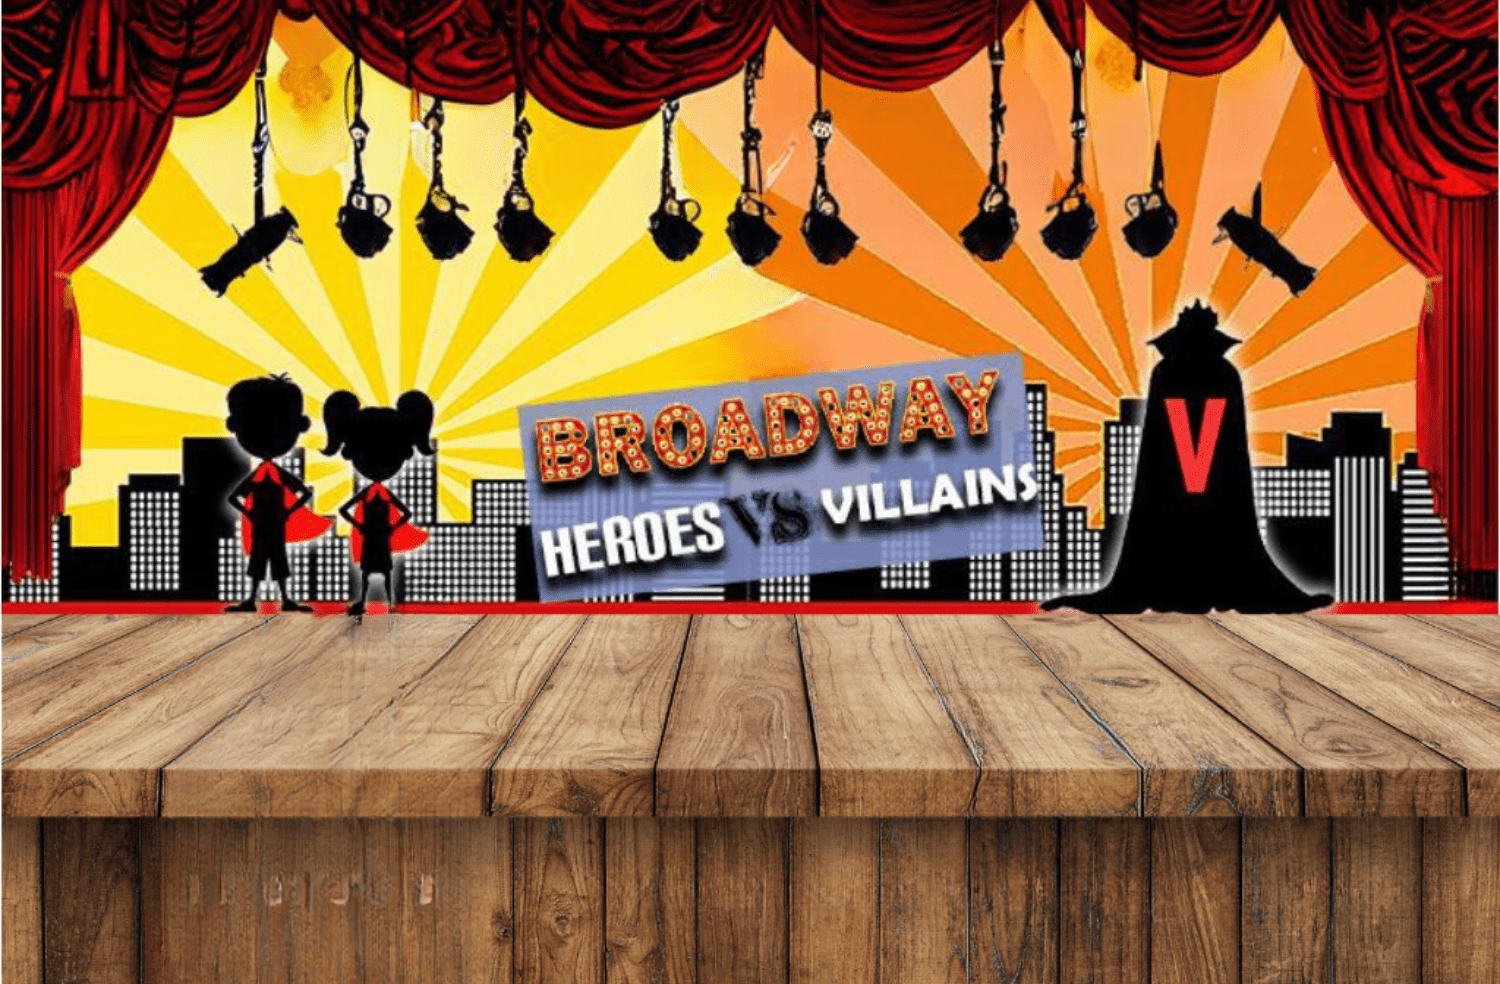 Broadway Heroes vs Villains